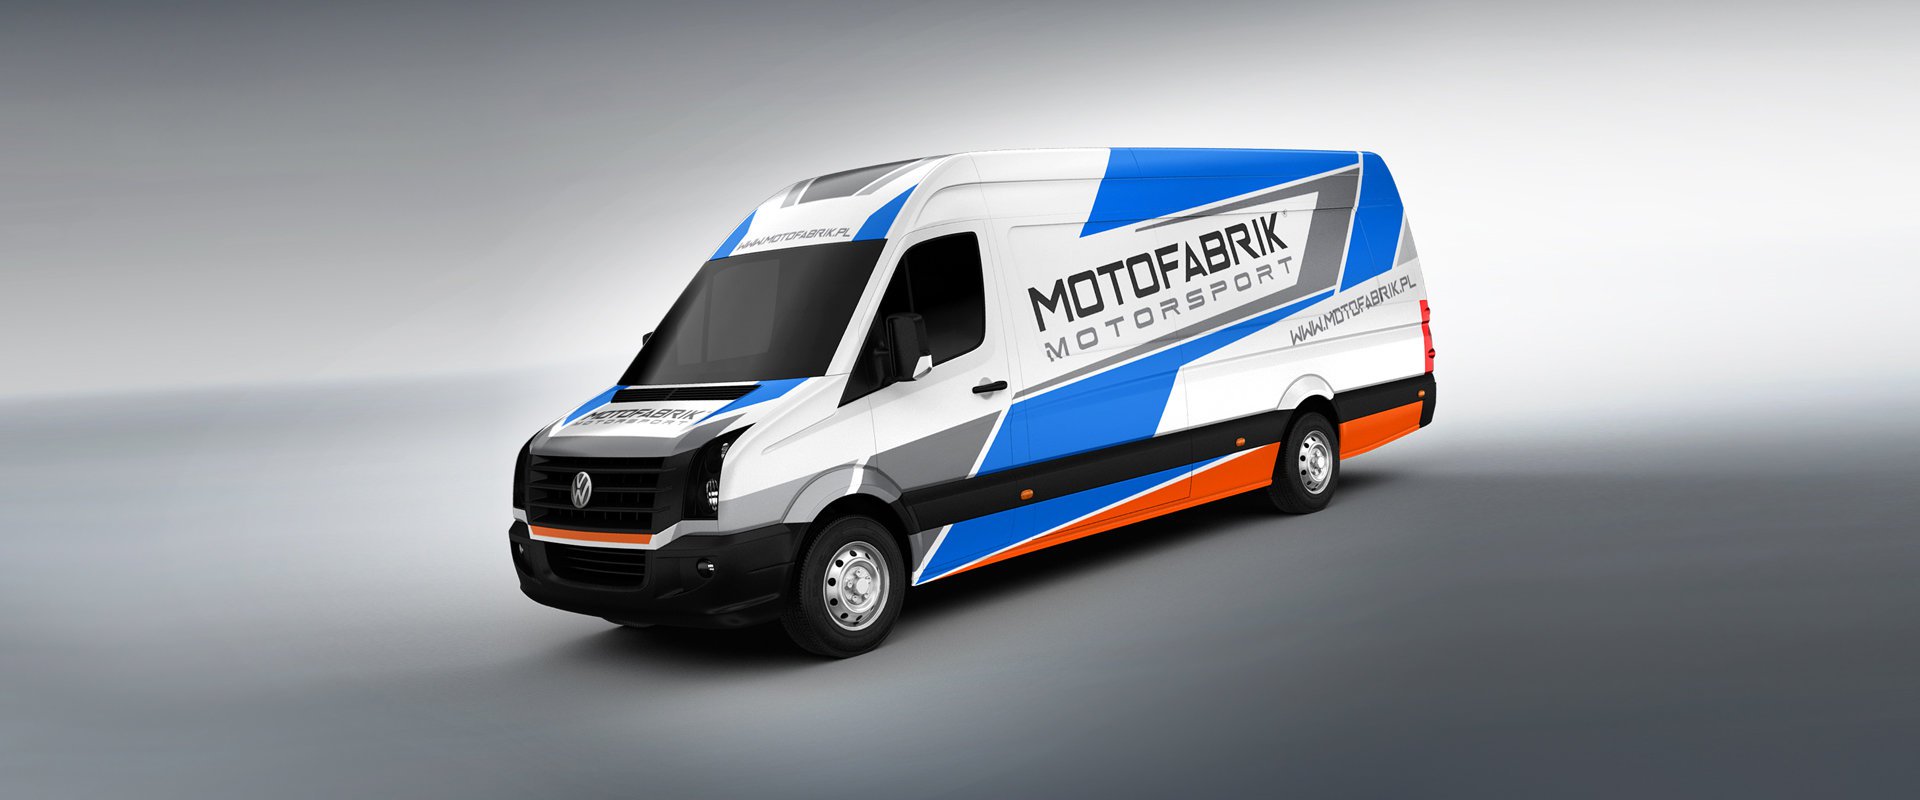 MotoFabrik Motorsport #1